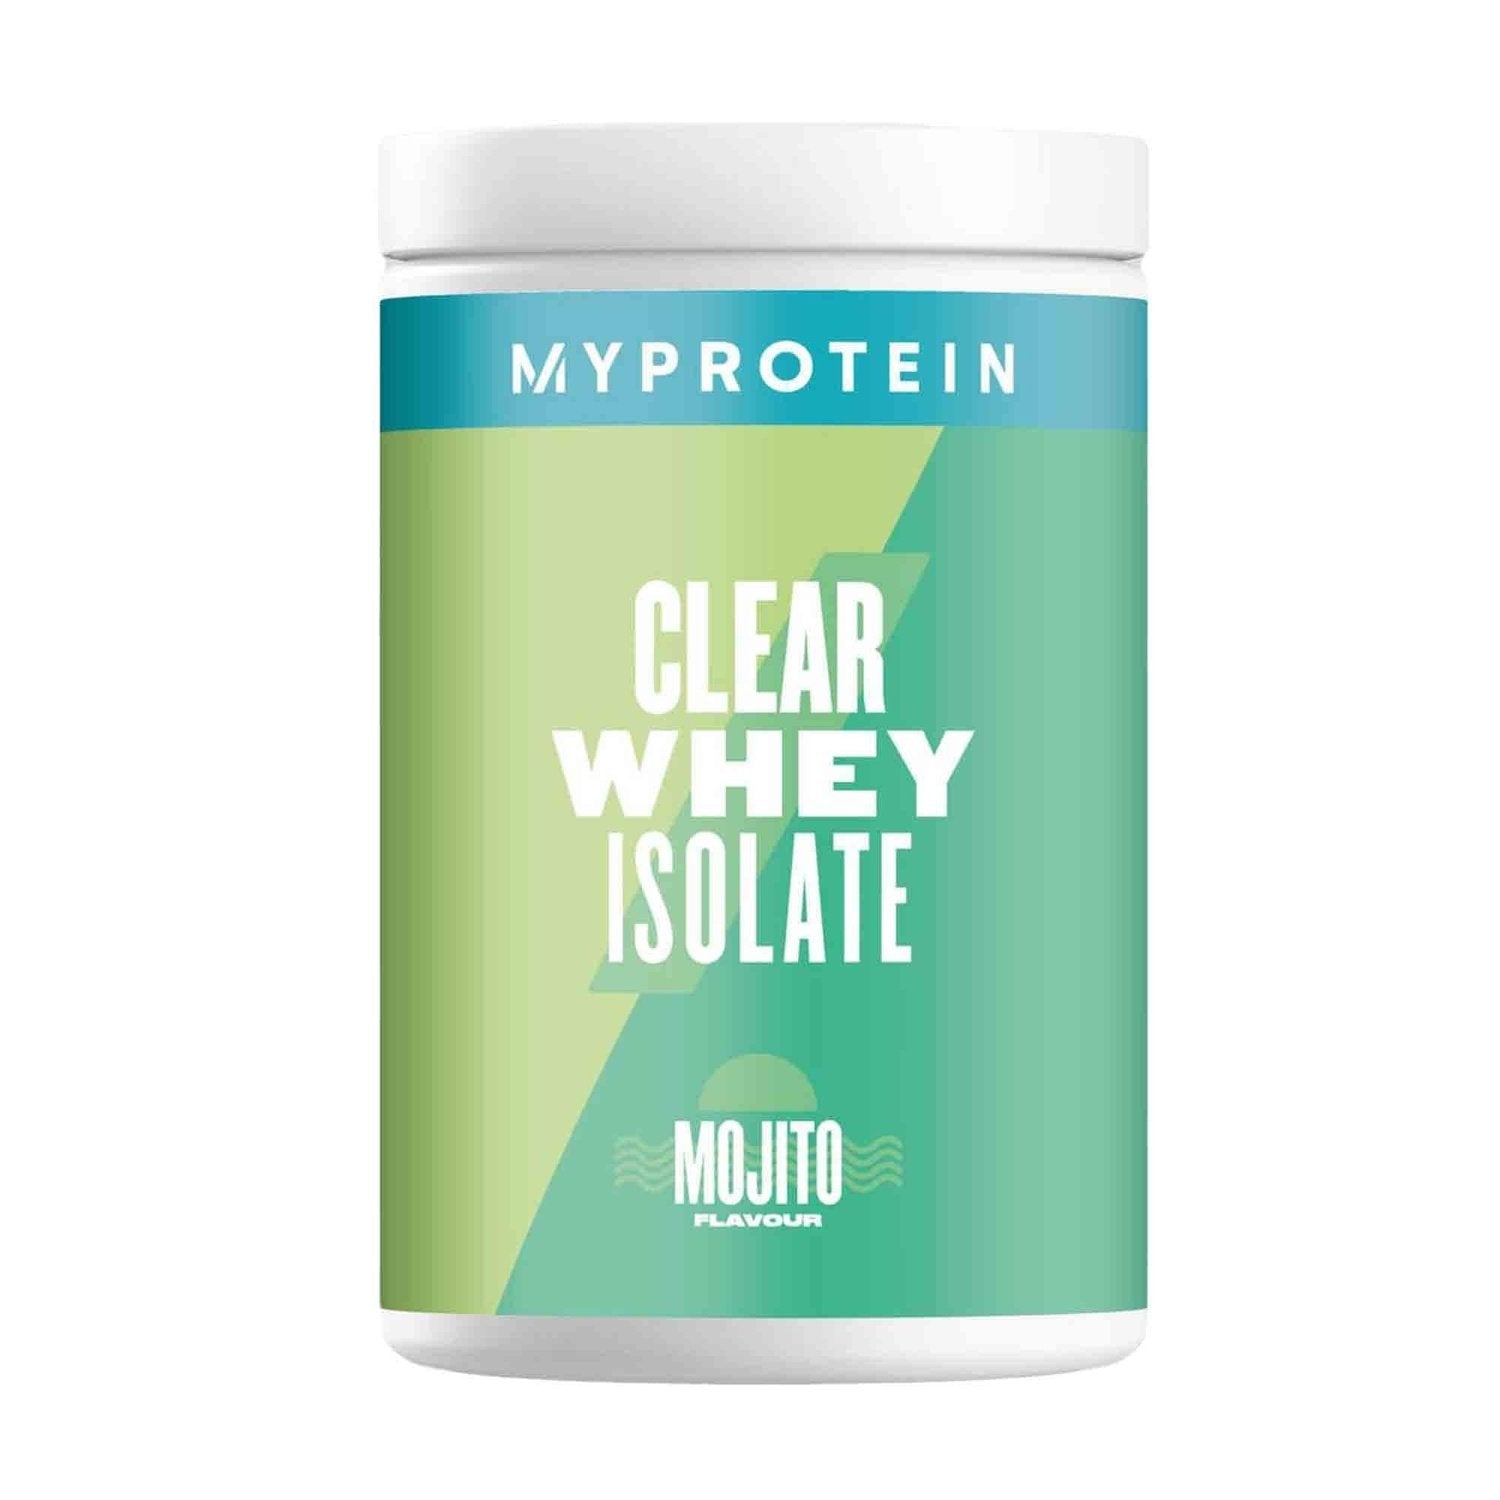 MyProtein Clear Whey Isolate 835 g Mojito kaufen bei HighPowered.ch